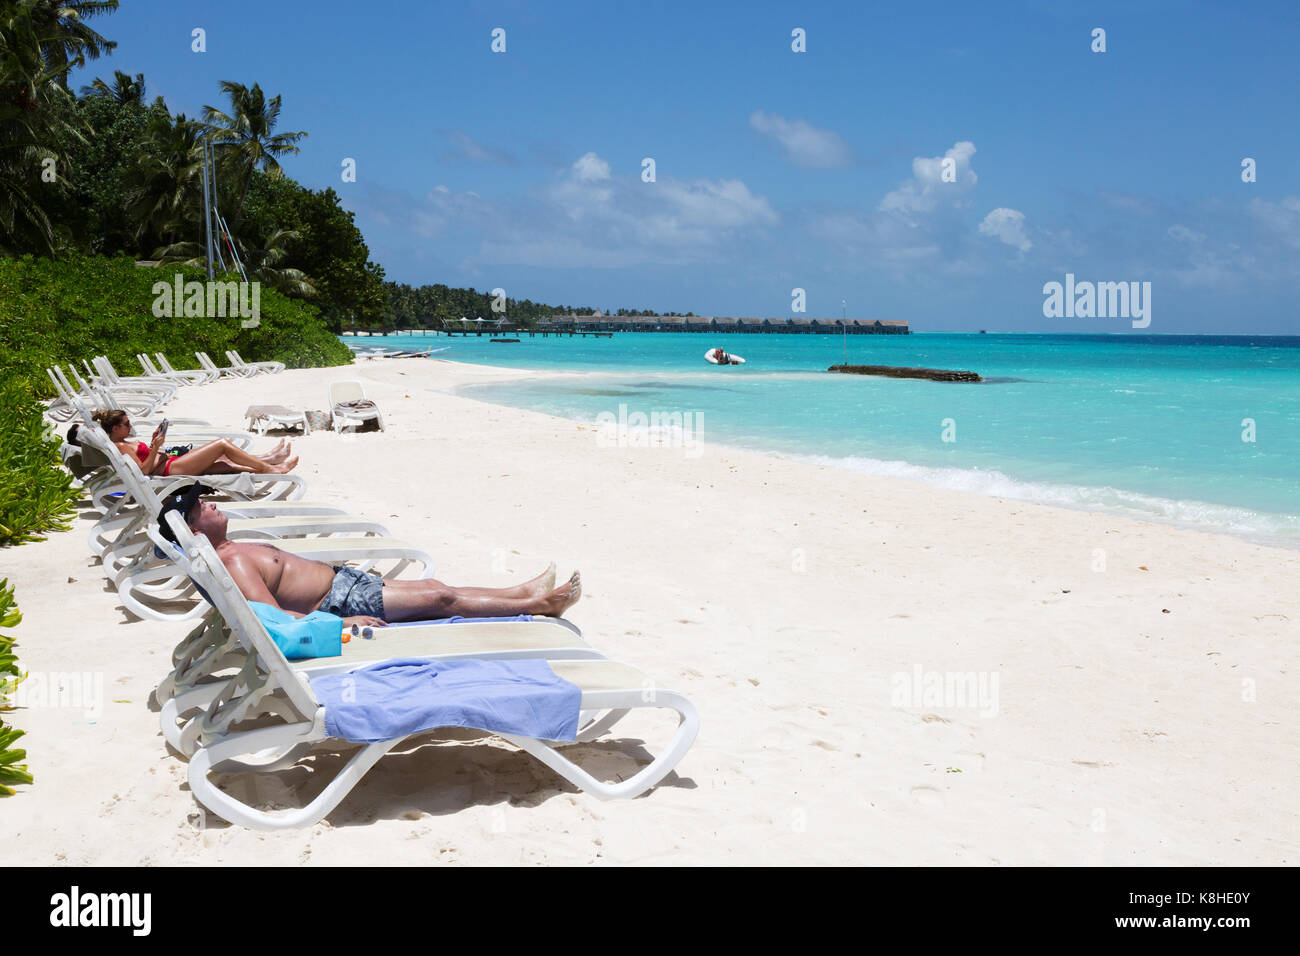 Maldives beach - tourists sunbathing on the beach, Kuramathi resort hotel, The Maldives, Asia Stock Photo